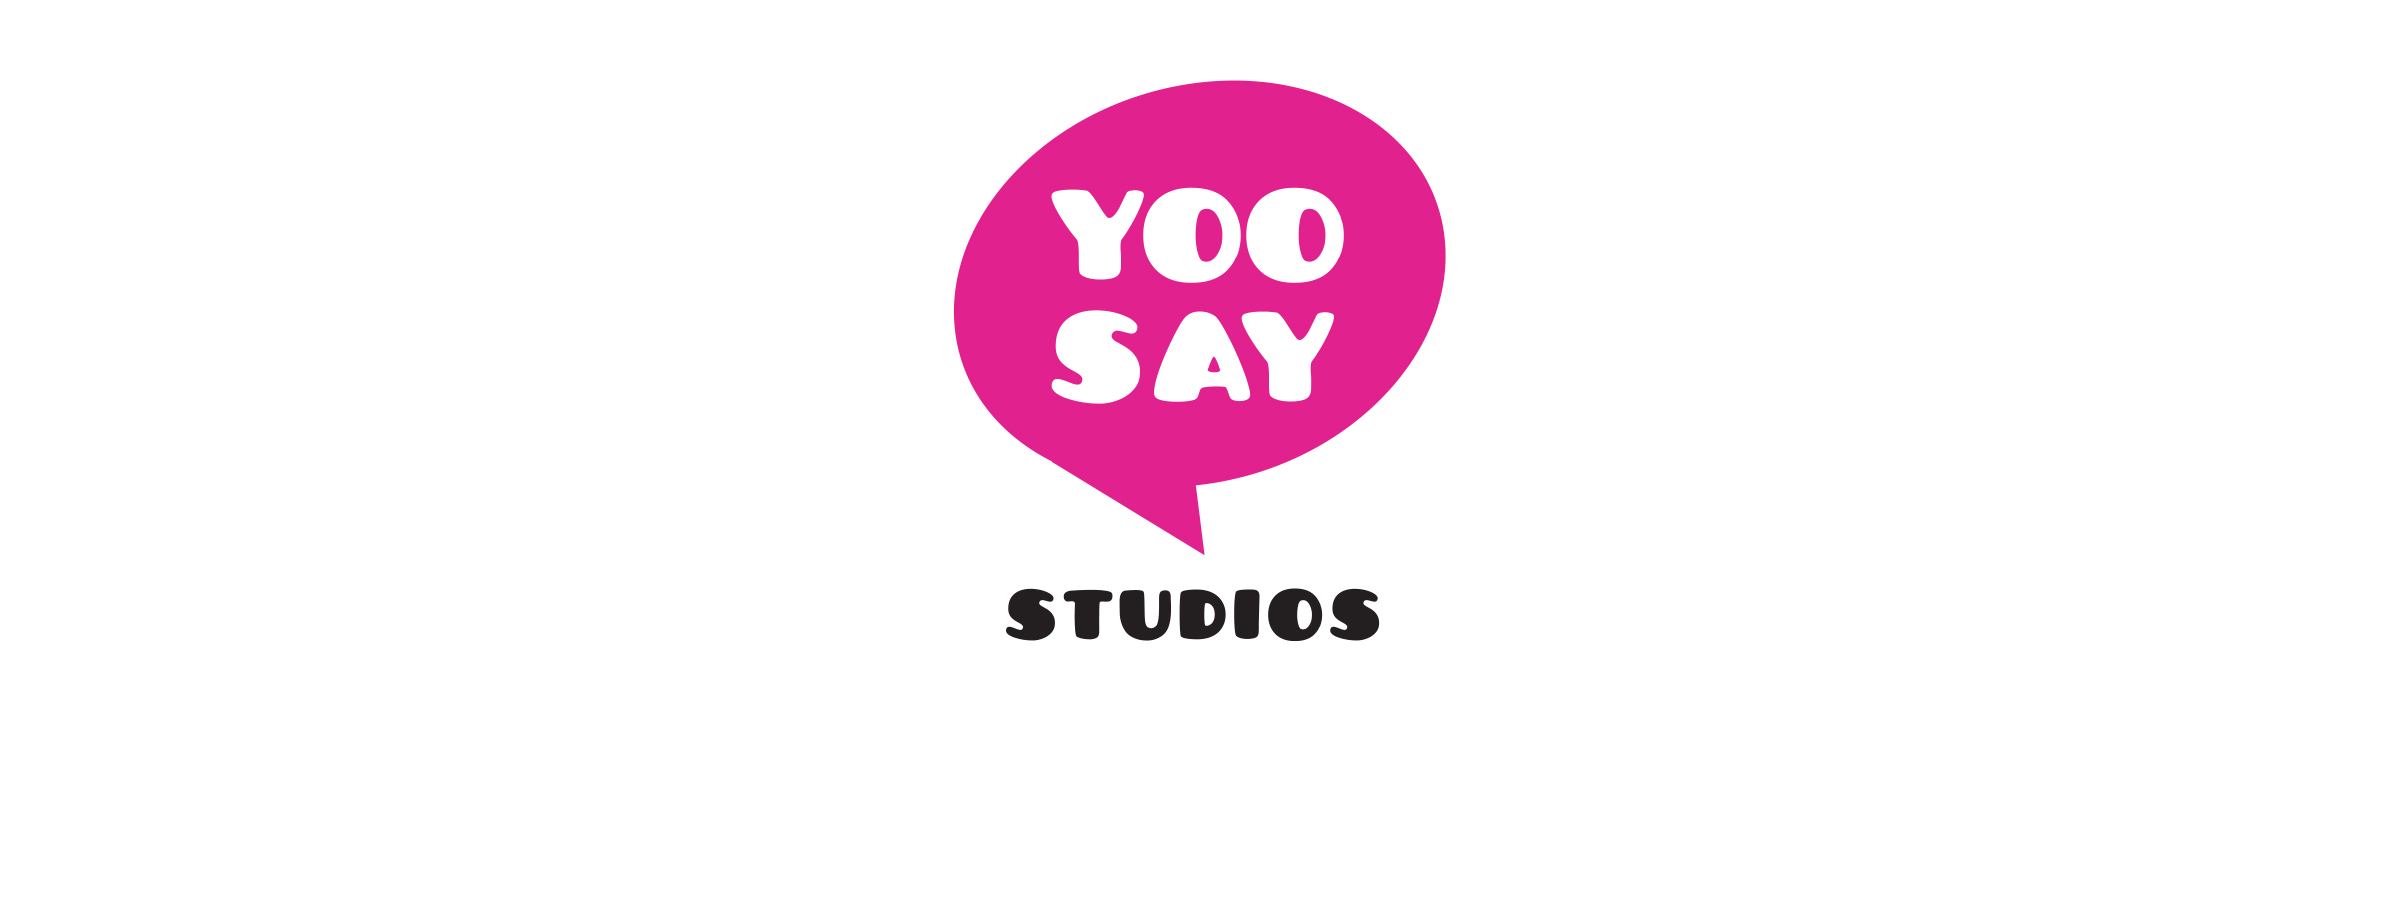 YooSay logo.jpg